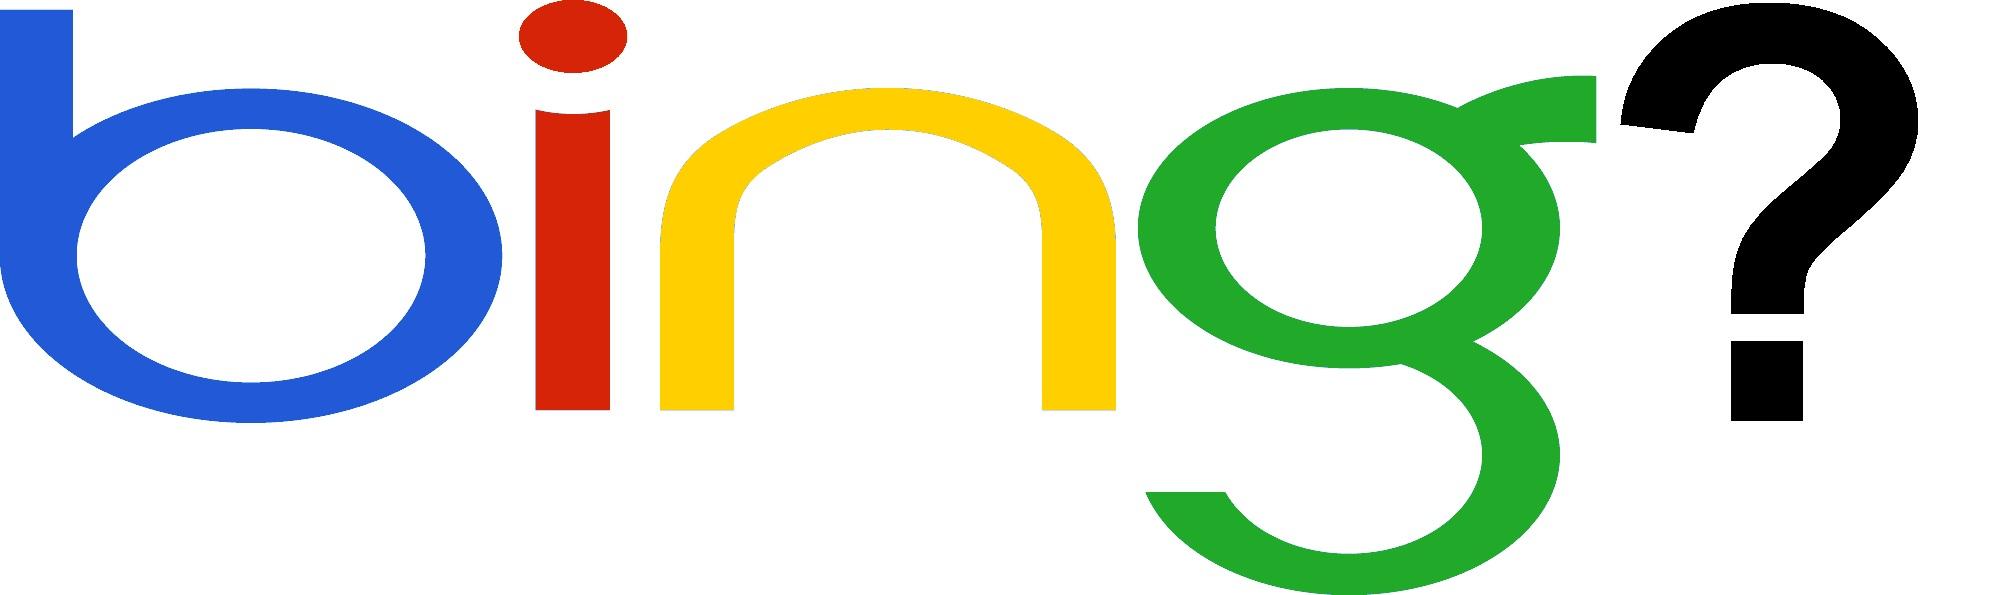 First Bing Logo - Intrepid explorer arrives at Google via Bing